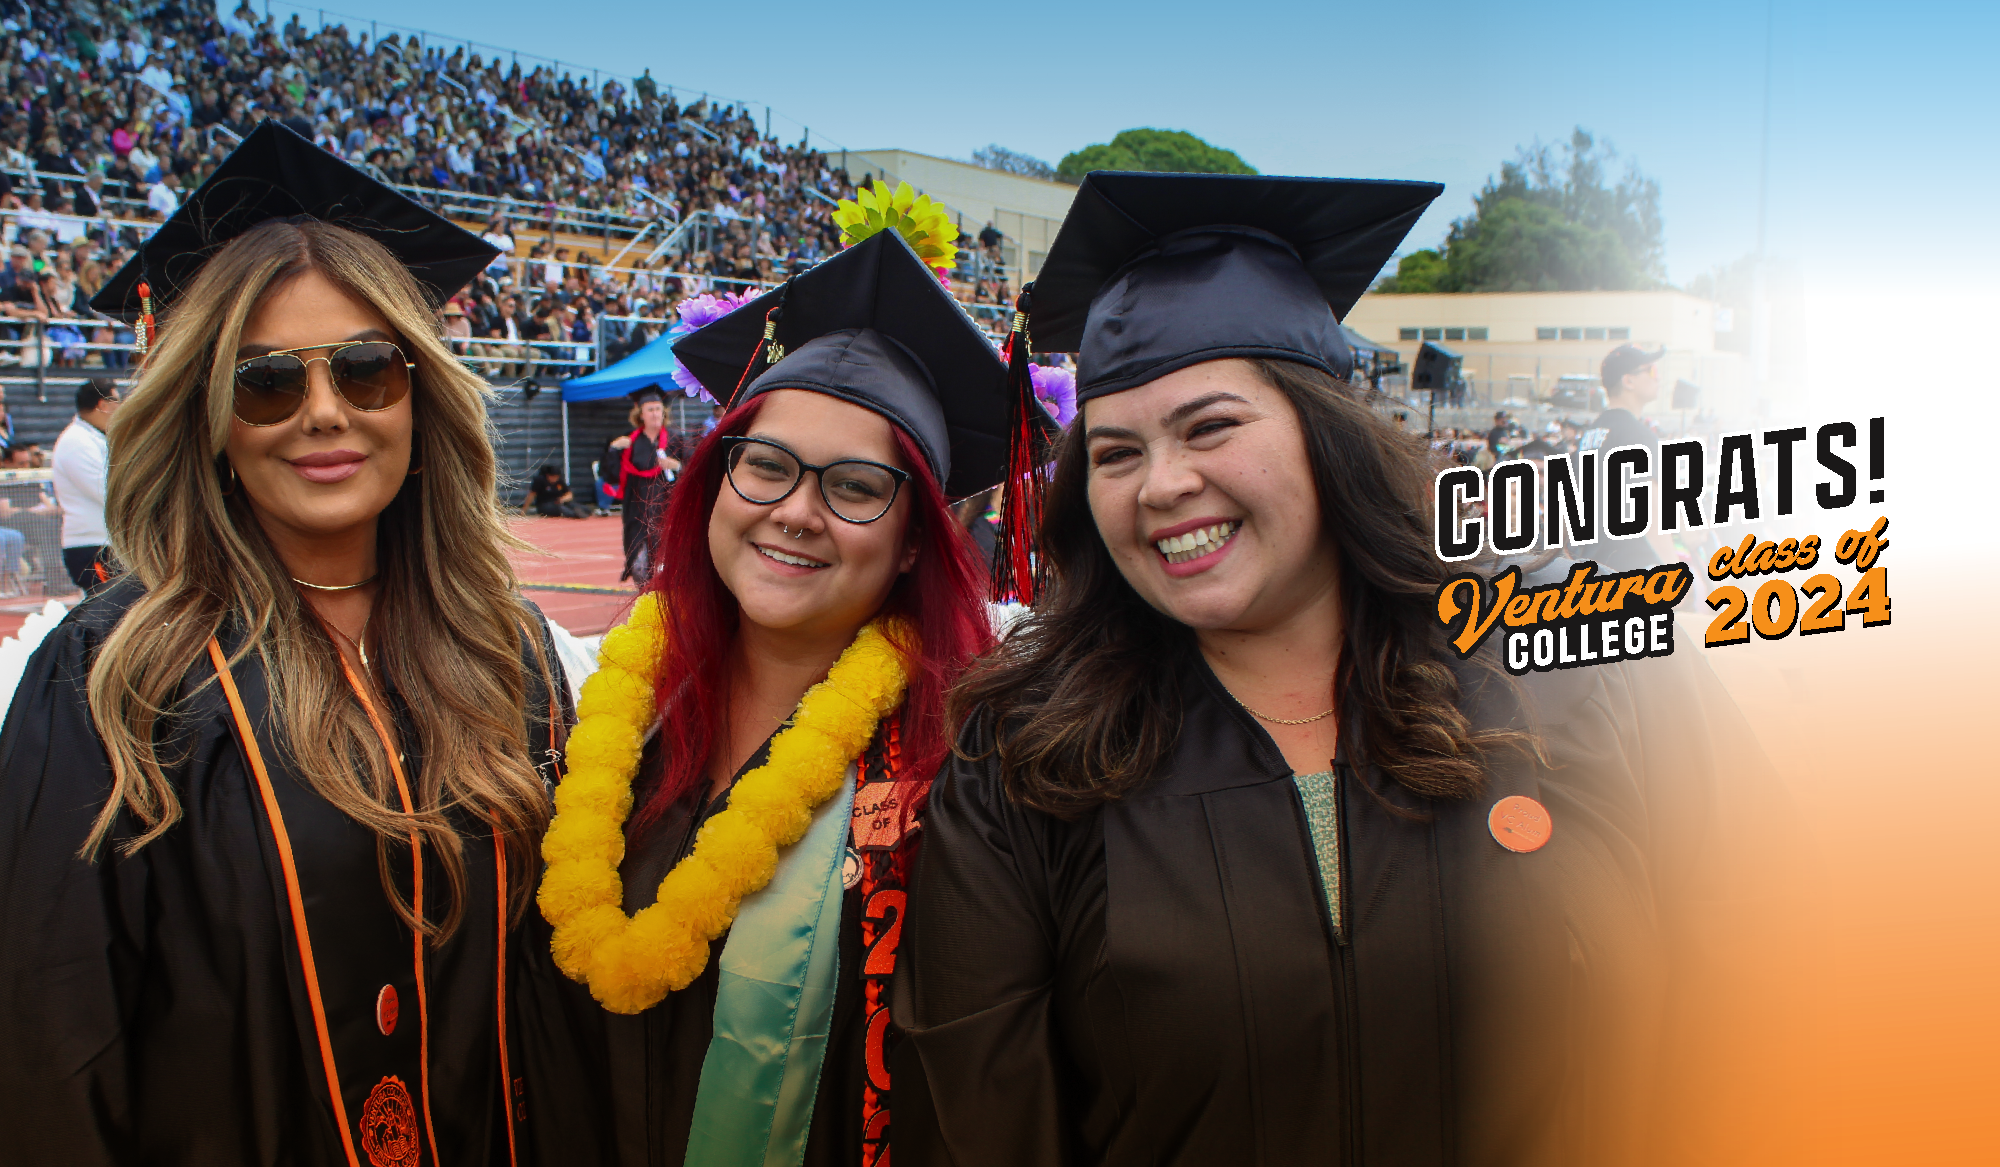 congrats ventura college class of 2024 with image of 3 female graduates